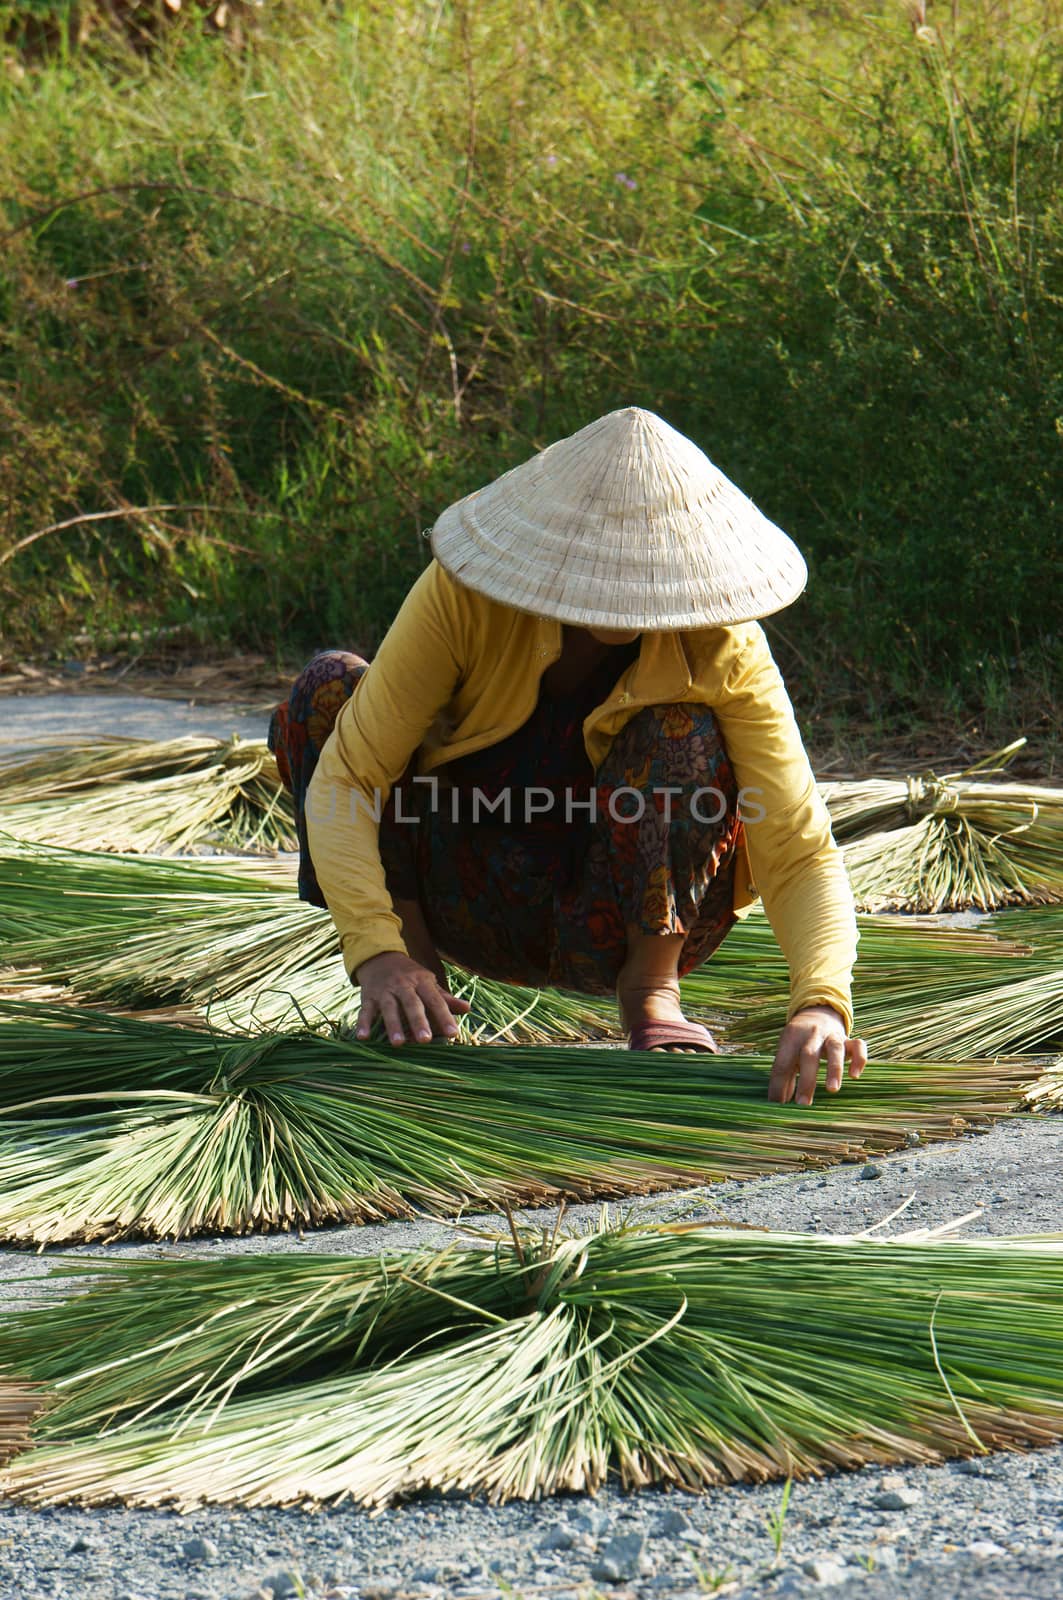 LONG AN, VIETNAM- NOVEMBER 11: People dry rush (sedge) on asphalt surface, she arrange into sector shape, this grass to make sleeping mat,Long An, Viet Nam,November 11, 2013